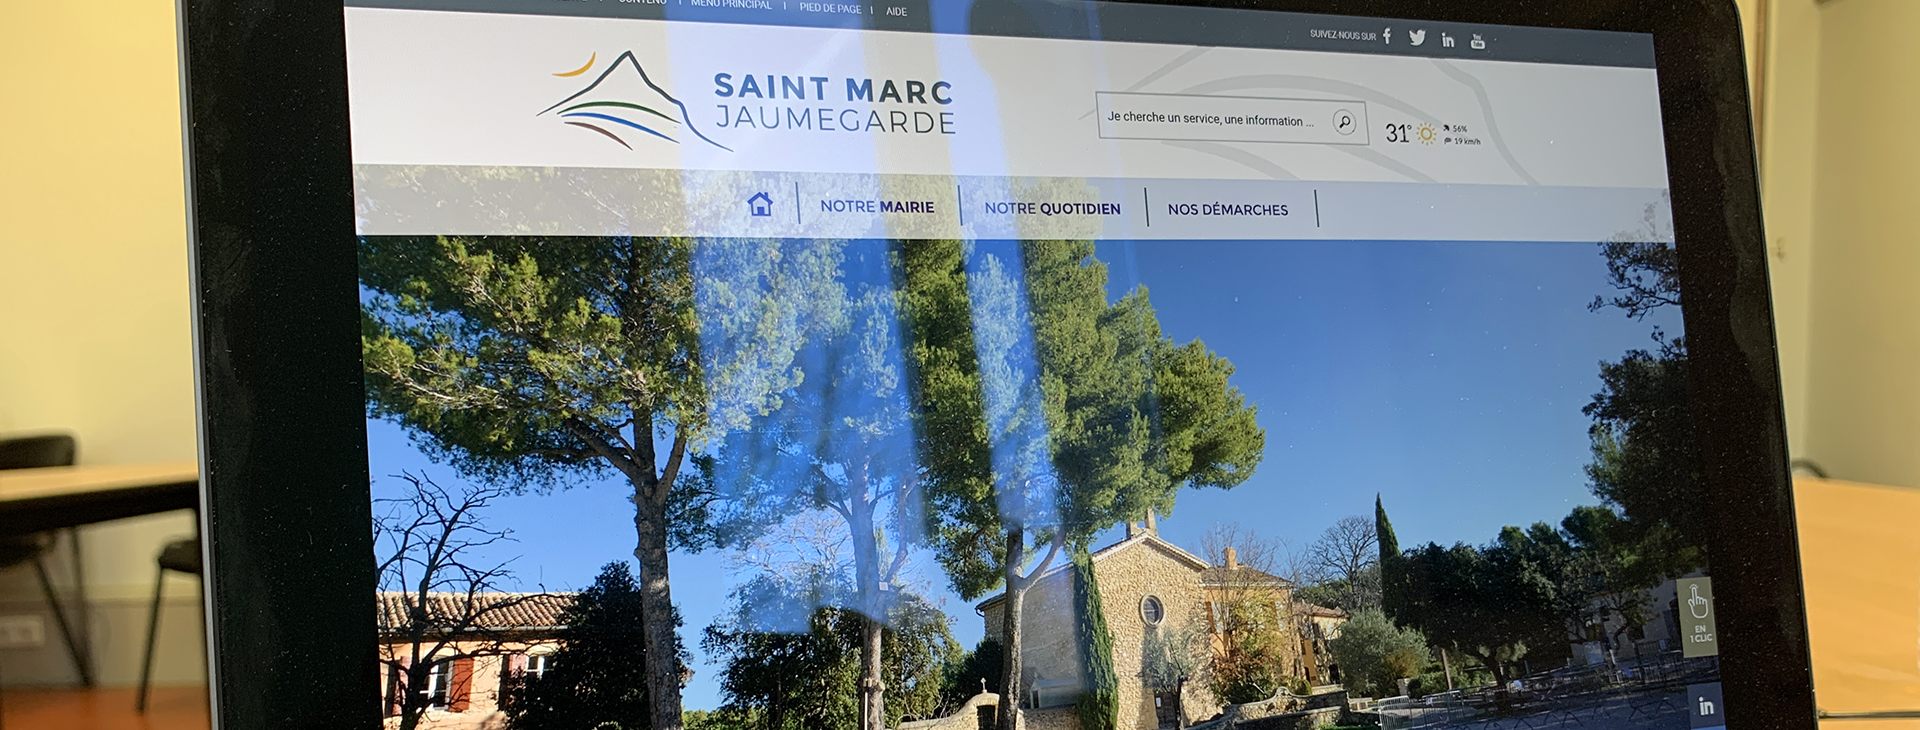 https://www.saint-marc-jaumegarde.fr/wp-content/uploads/2021/03/SLIDE-ETRE-BIEN-INFORMES-1920x730.png